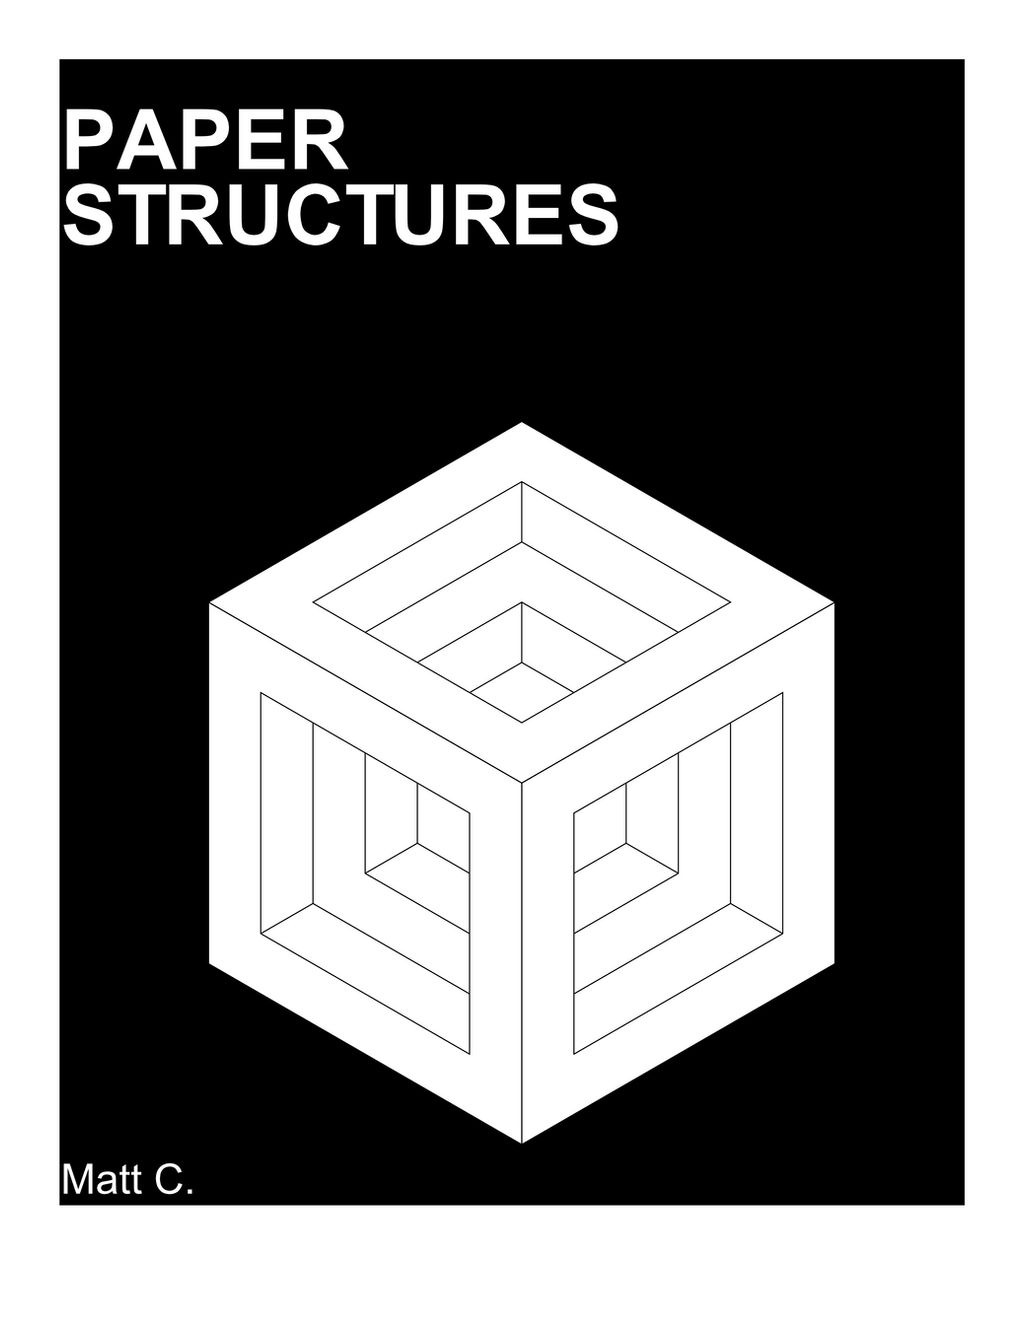 [Ebook] Paper Structures (Download in Description)